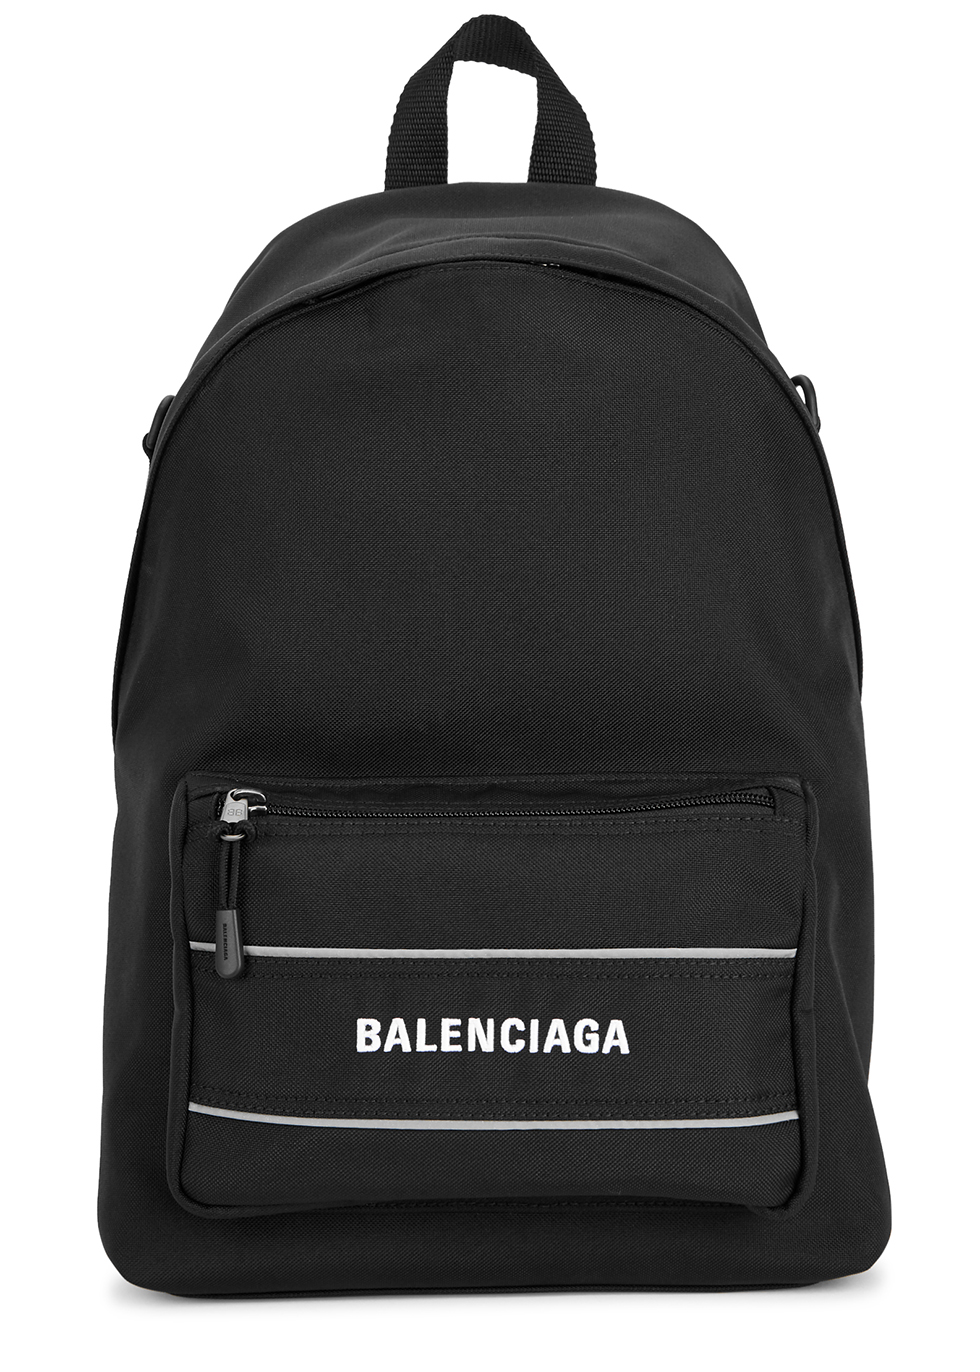 Balenciaga Sport black nylon backpack - Harvey Nichols